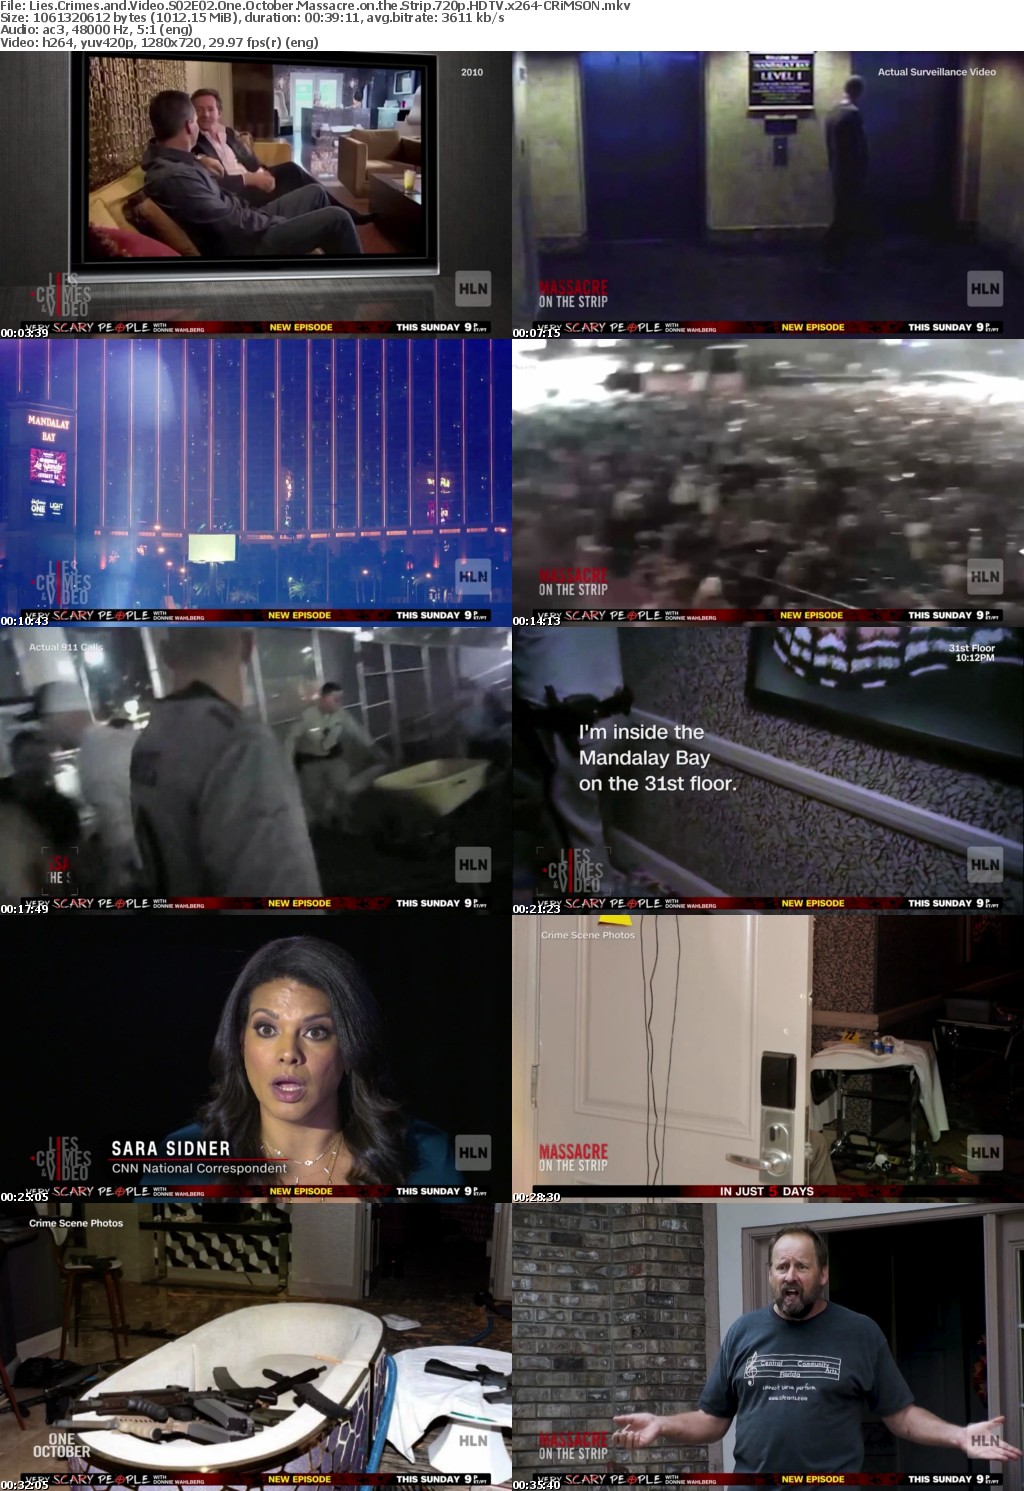 Lies Crimes and Video S02E02 One October Massacre on the Strip 720p HDTV x264-CRiMSON